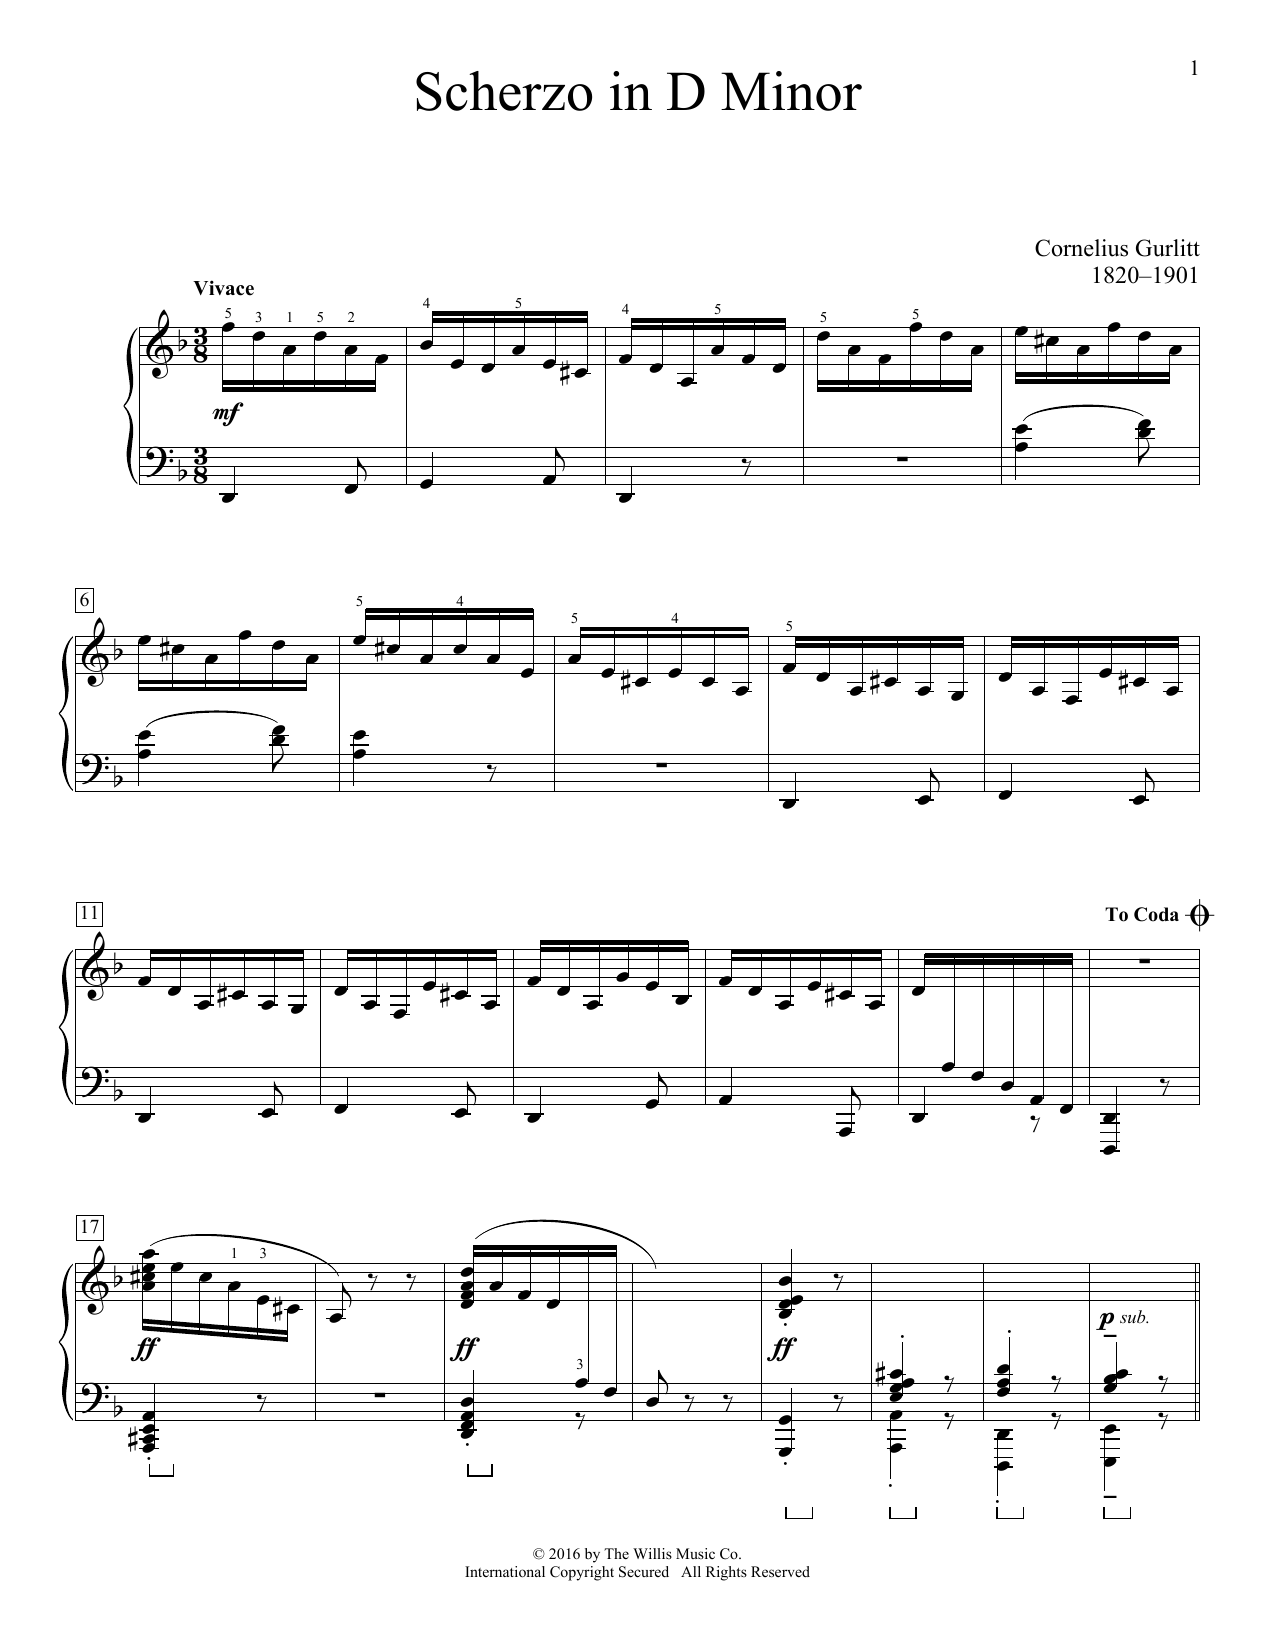 Download Cornelius Gurlitt Scherzo In D Minor Sheet Music and learn how to play Educational Piano PDF digital score in minutes